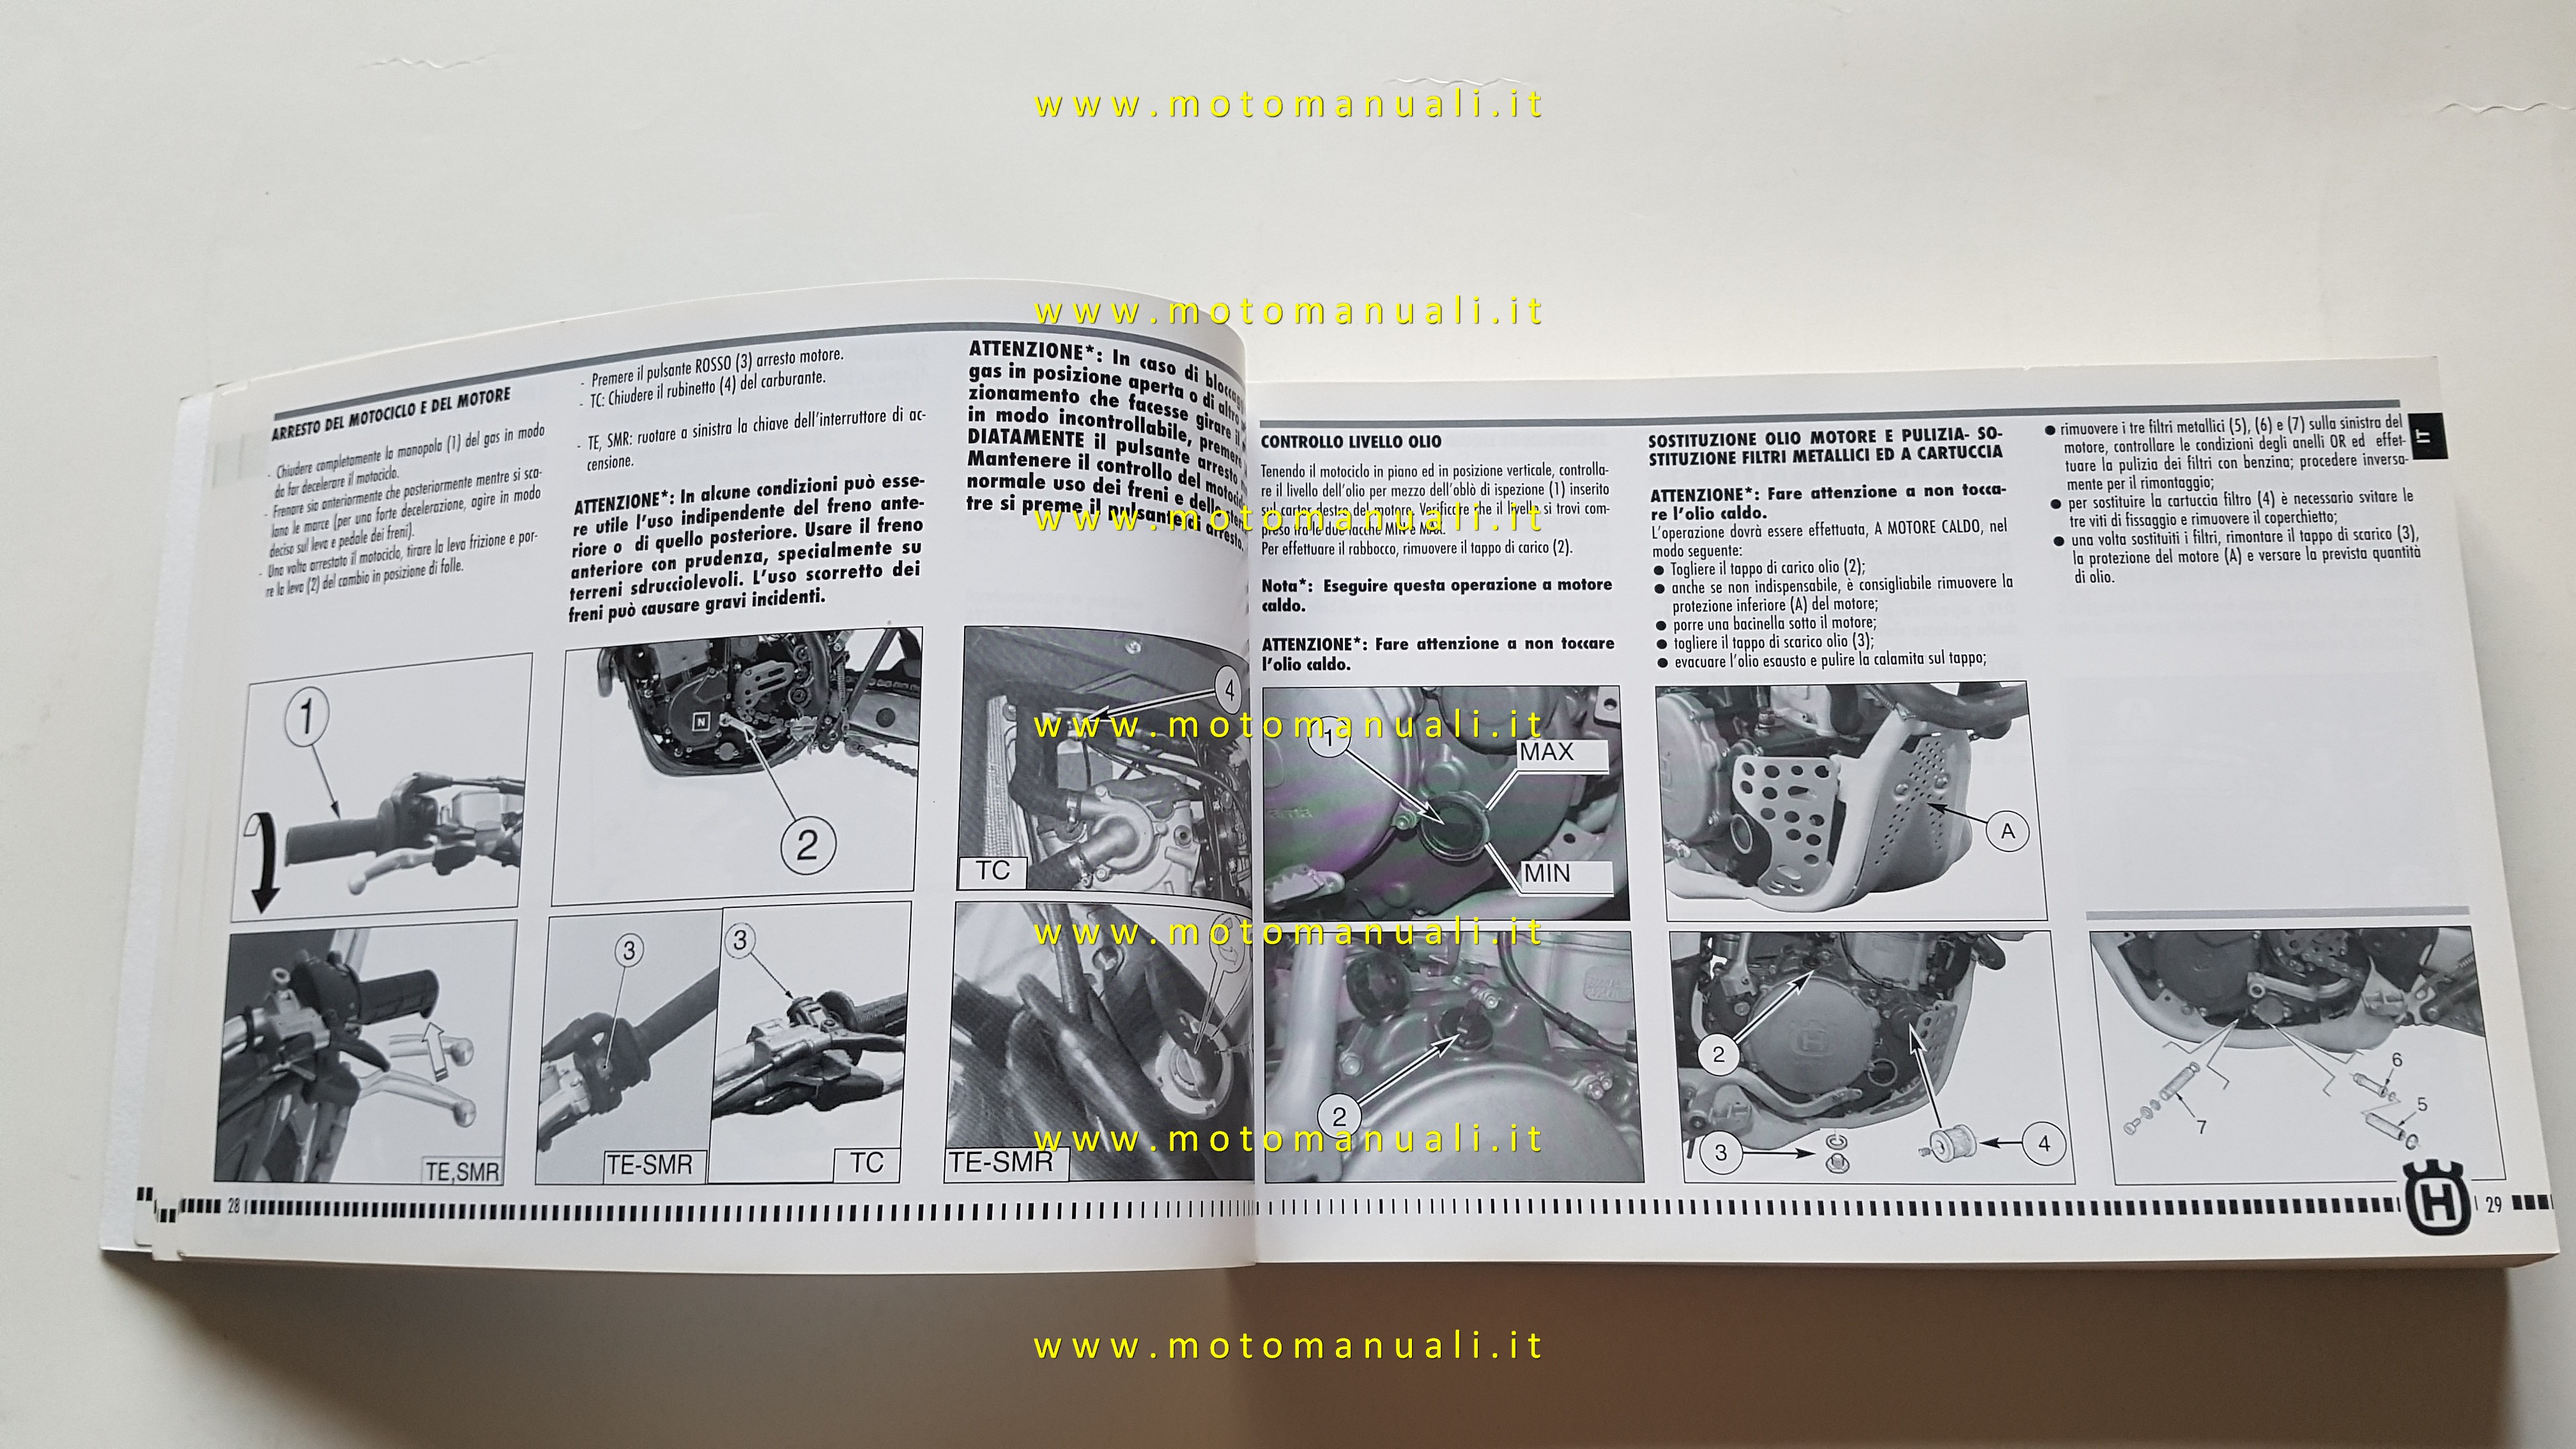 Owners manuals: Husqvarna TE TC TCX SMR 250-450-510 2008 manuale